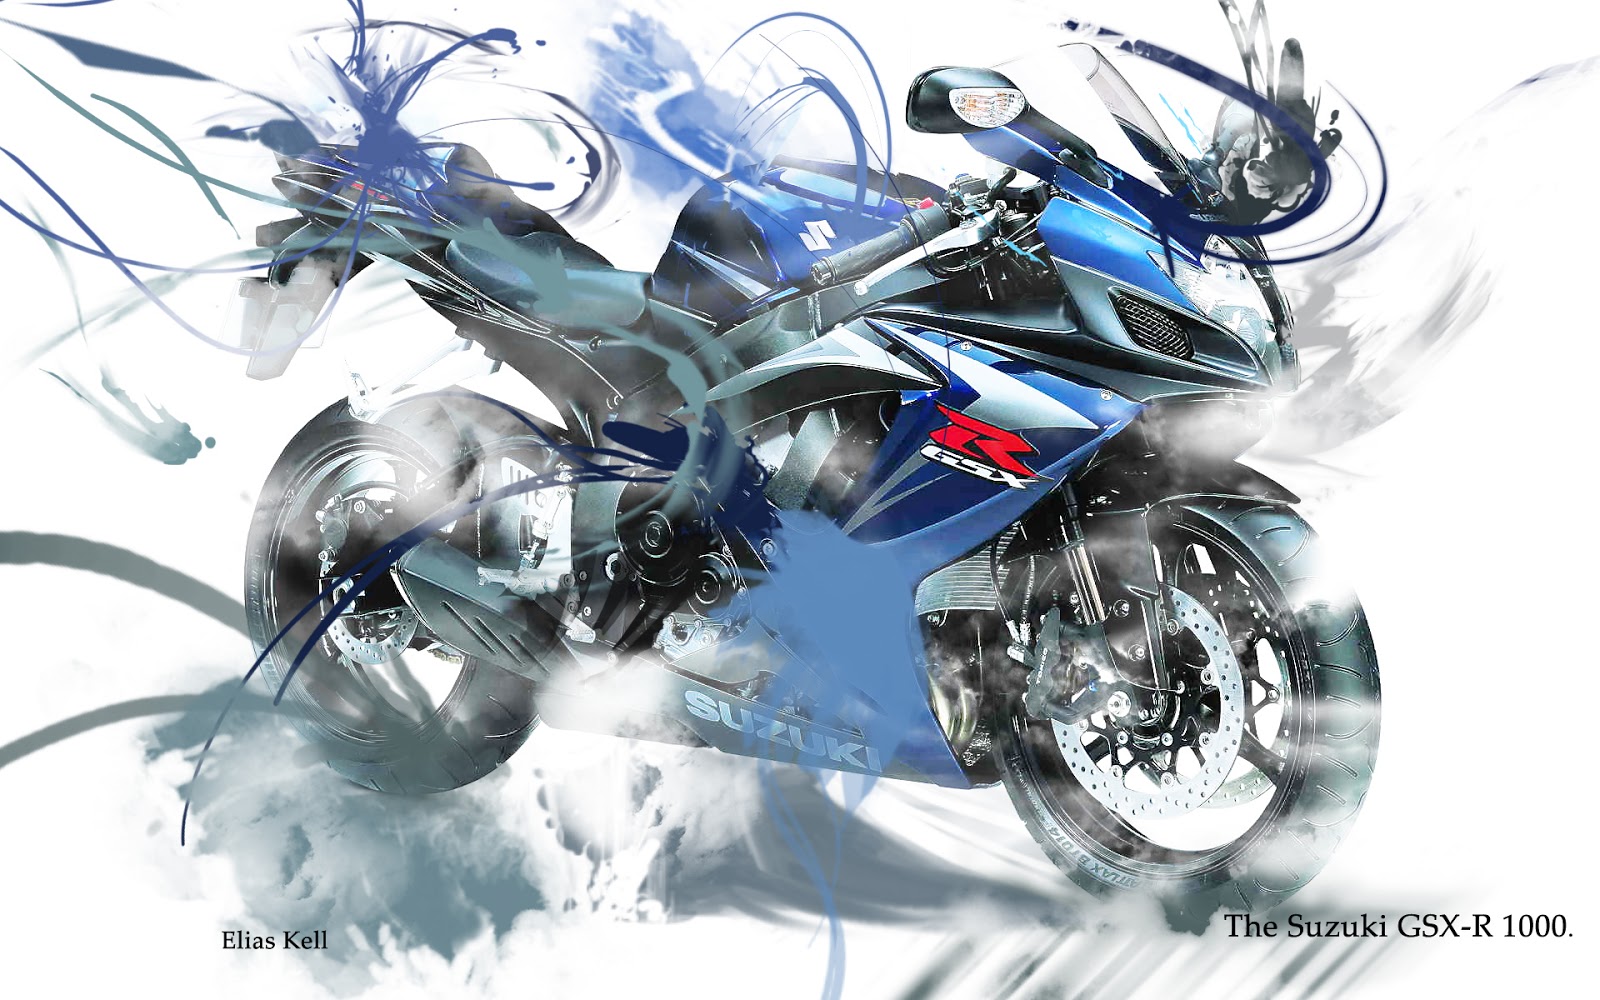 Luusama Motorcycle And Helmet Blog News Suzuki GSX R1000 Animation